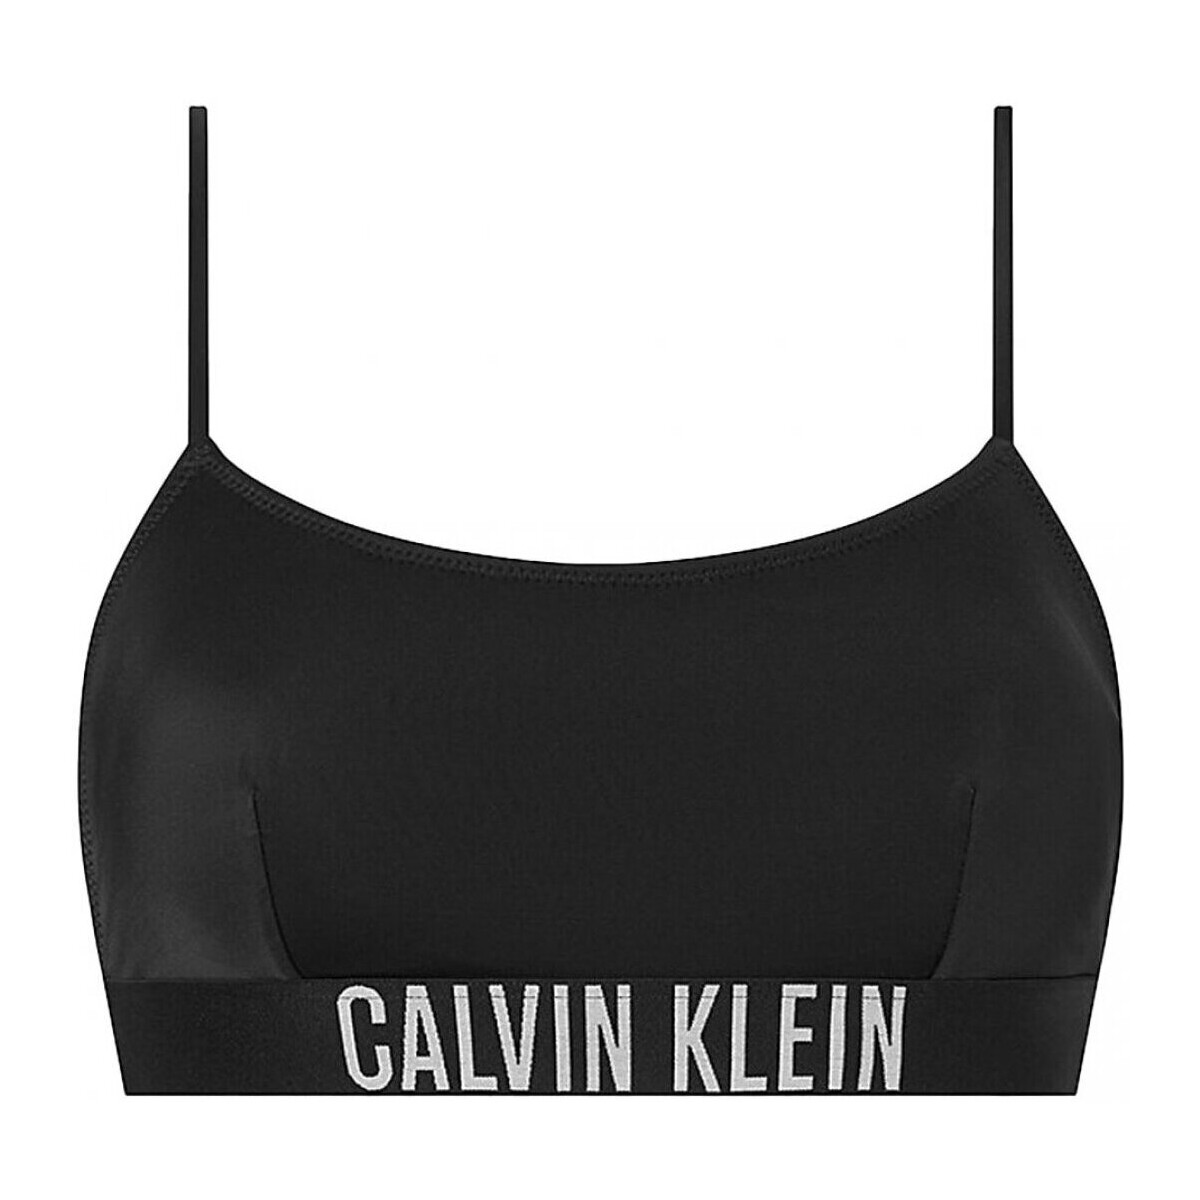 Rintaliivit Calvin Klein Jeans KW0KW01851 EU XS